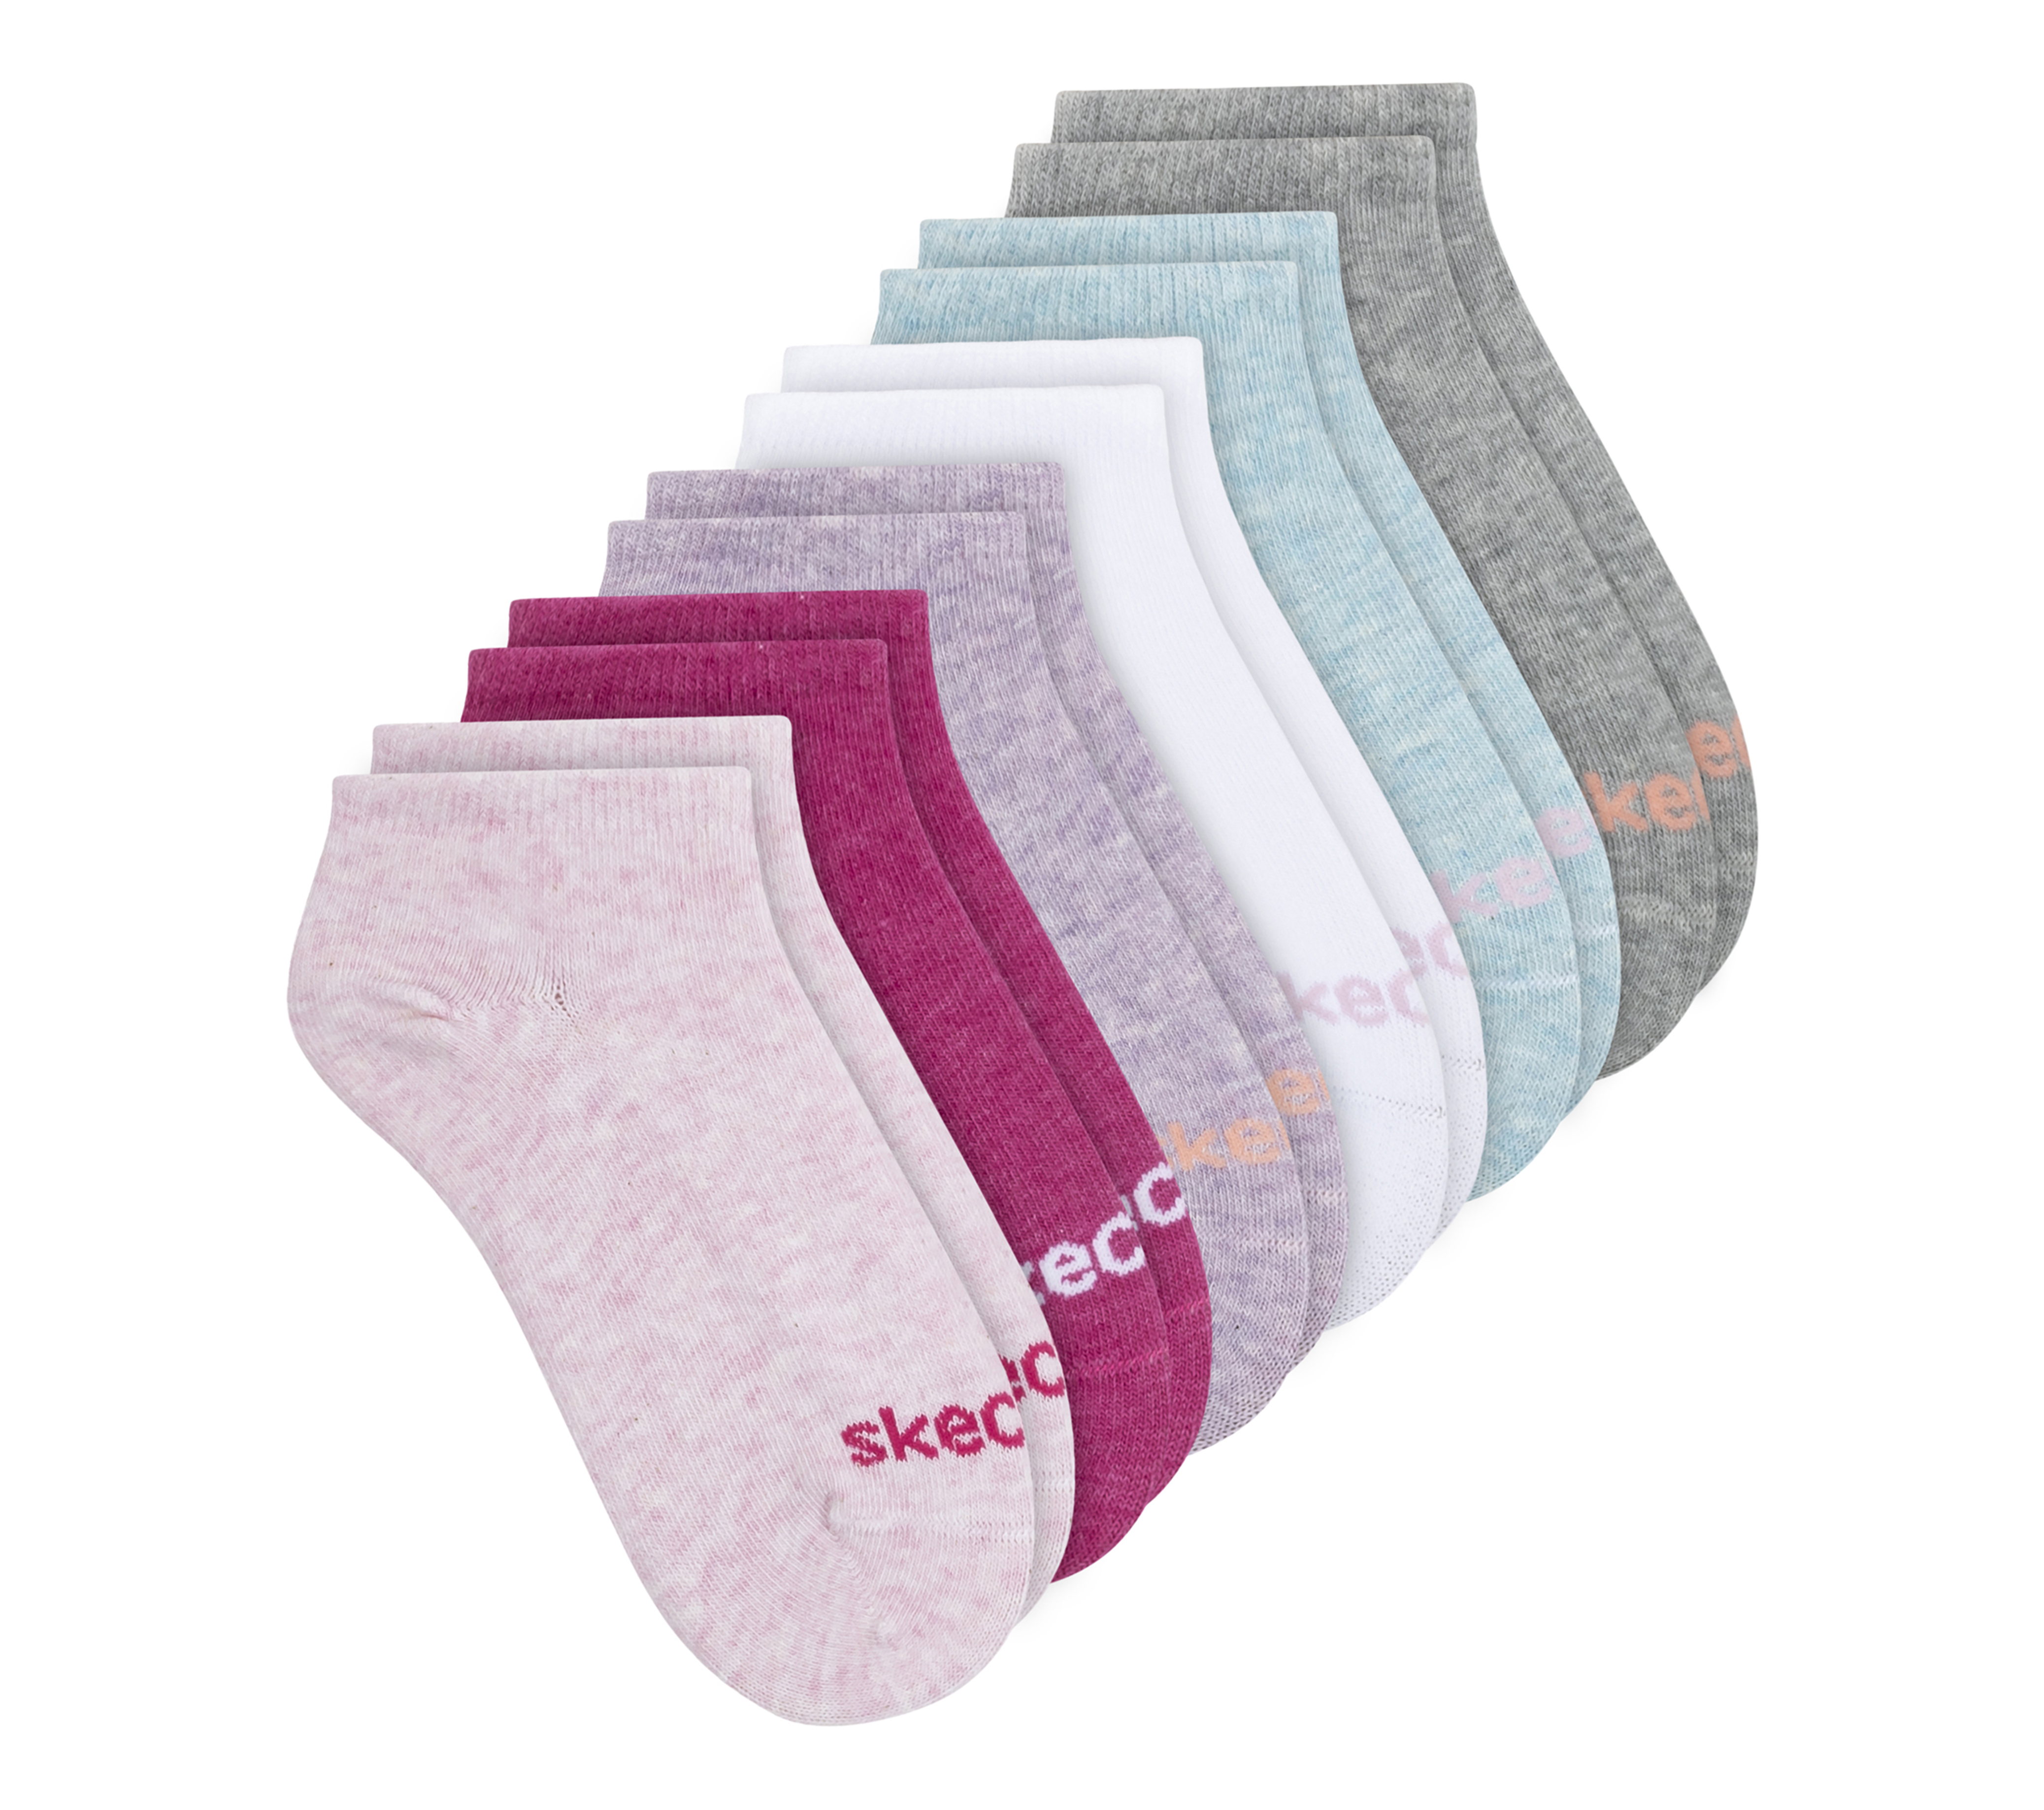 6 Pack No Show SKECHERS Cotton | Socks